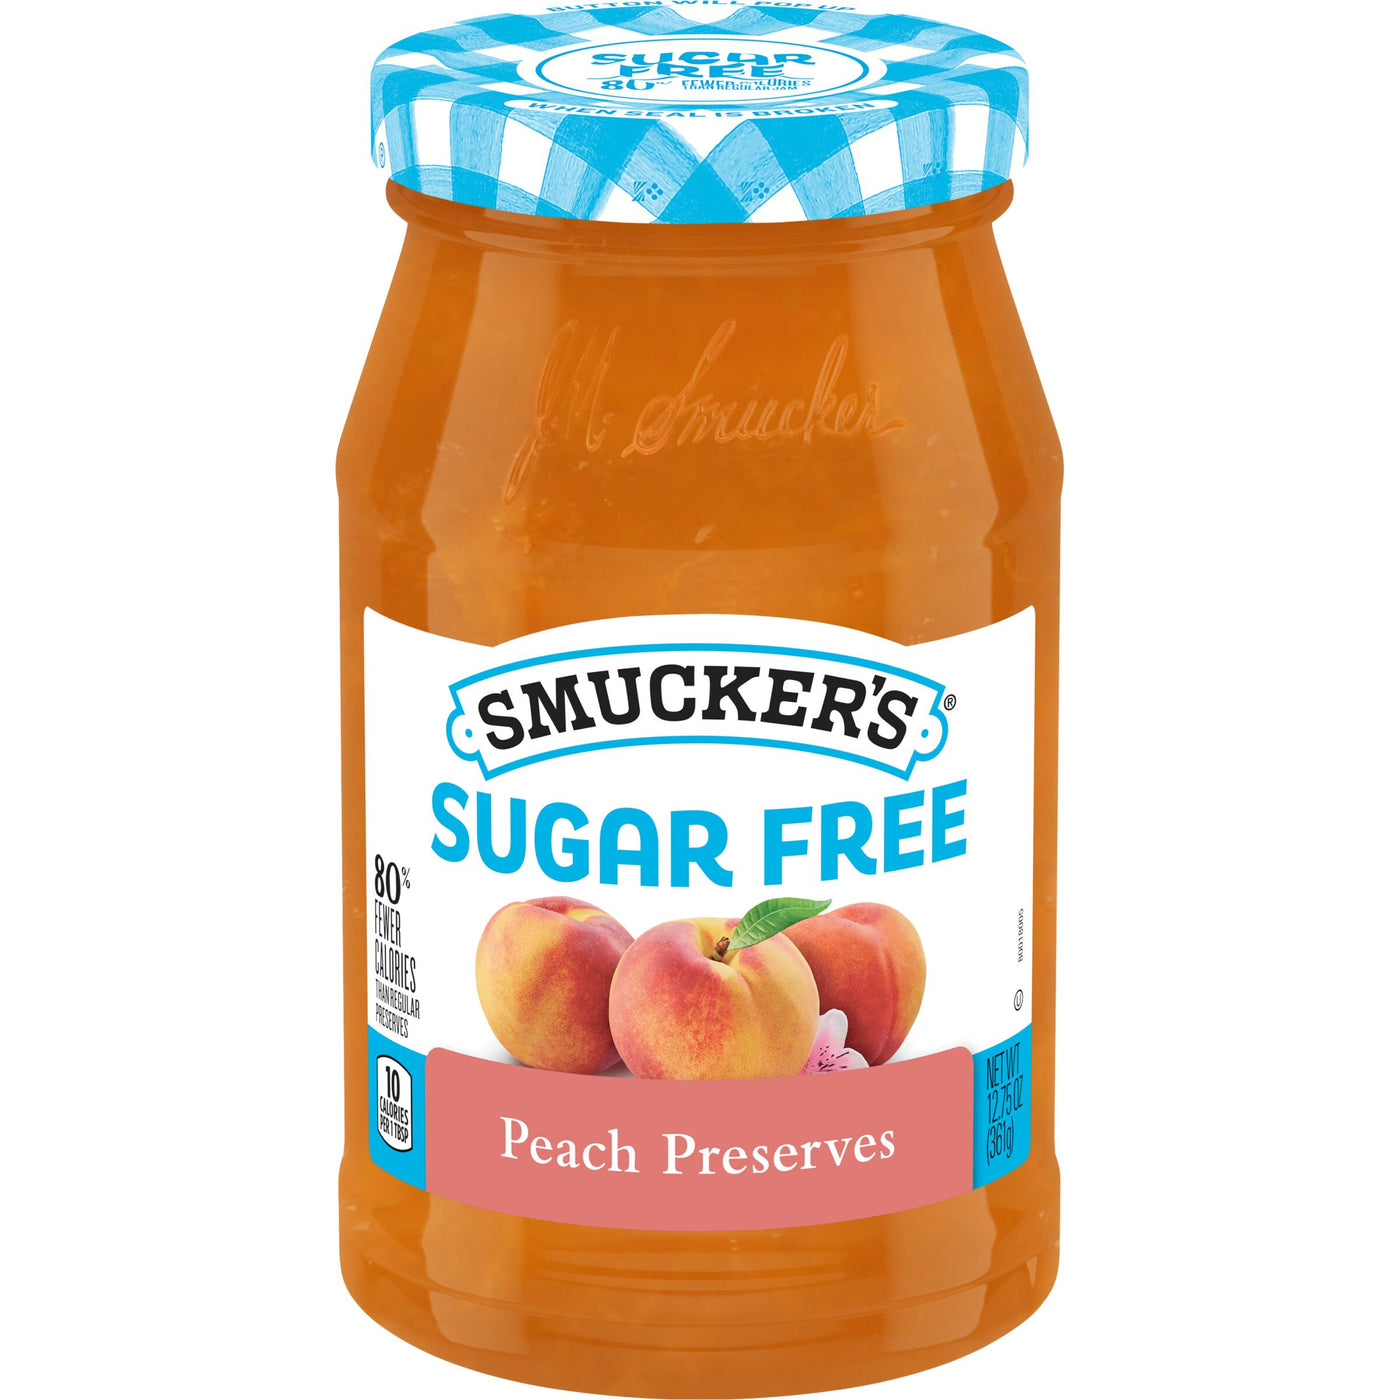 Smucker's Sugar Free Peach Preserves with Splenda Brand Sweetener, 12.75 oz